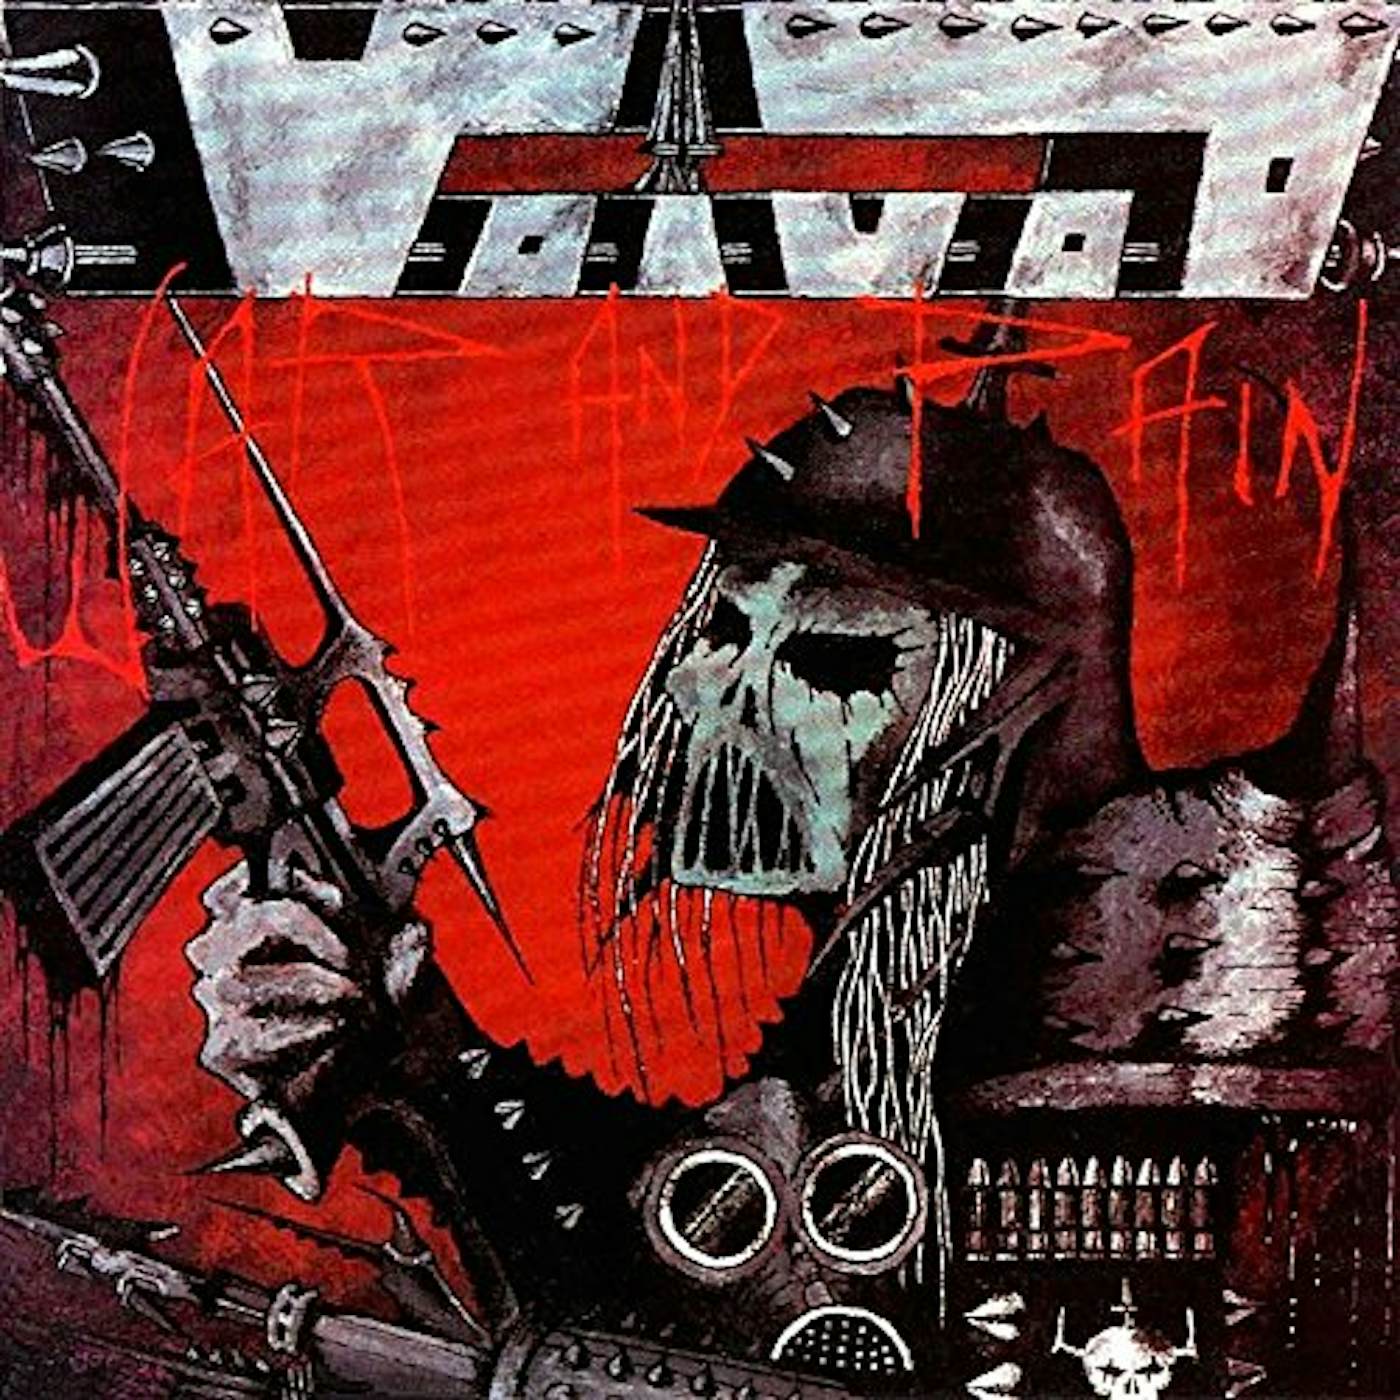 Voivod War and Pain Vinyl Record